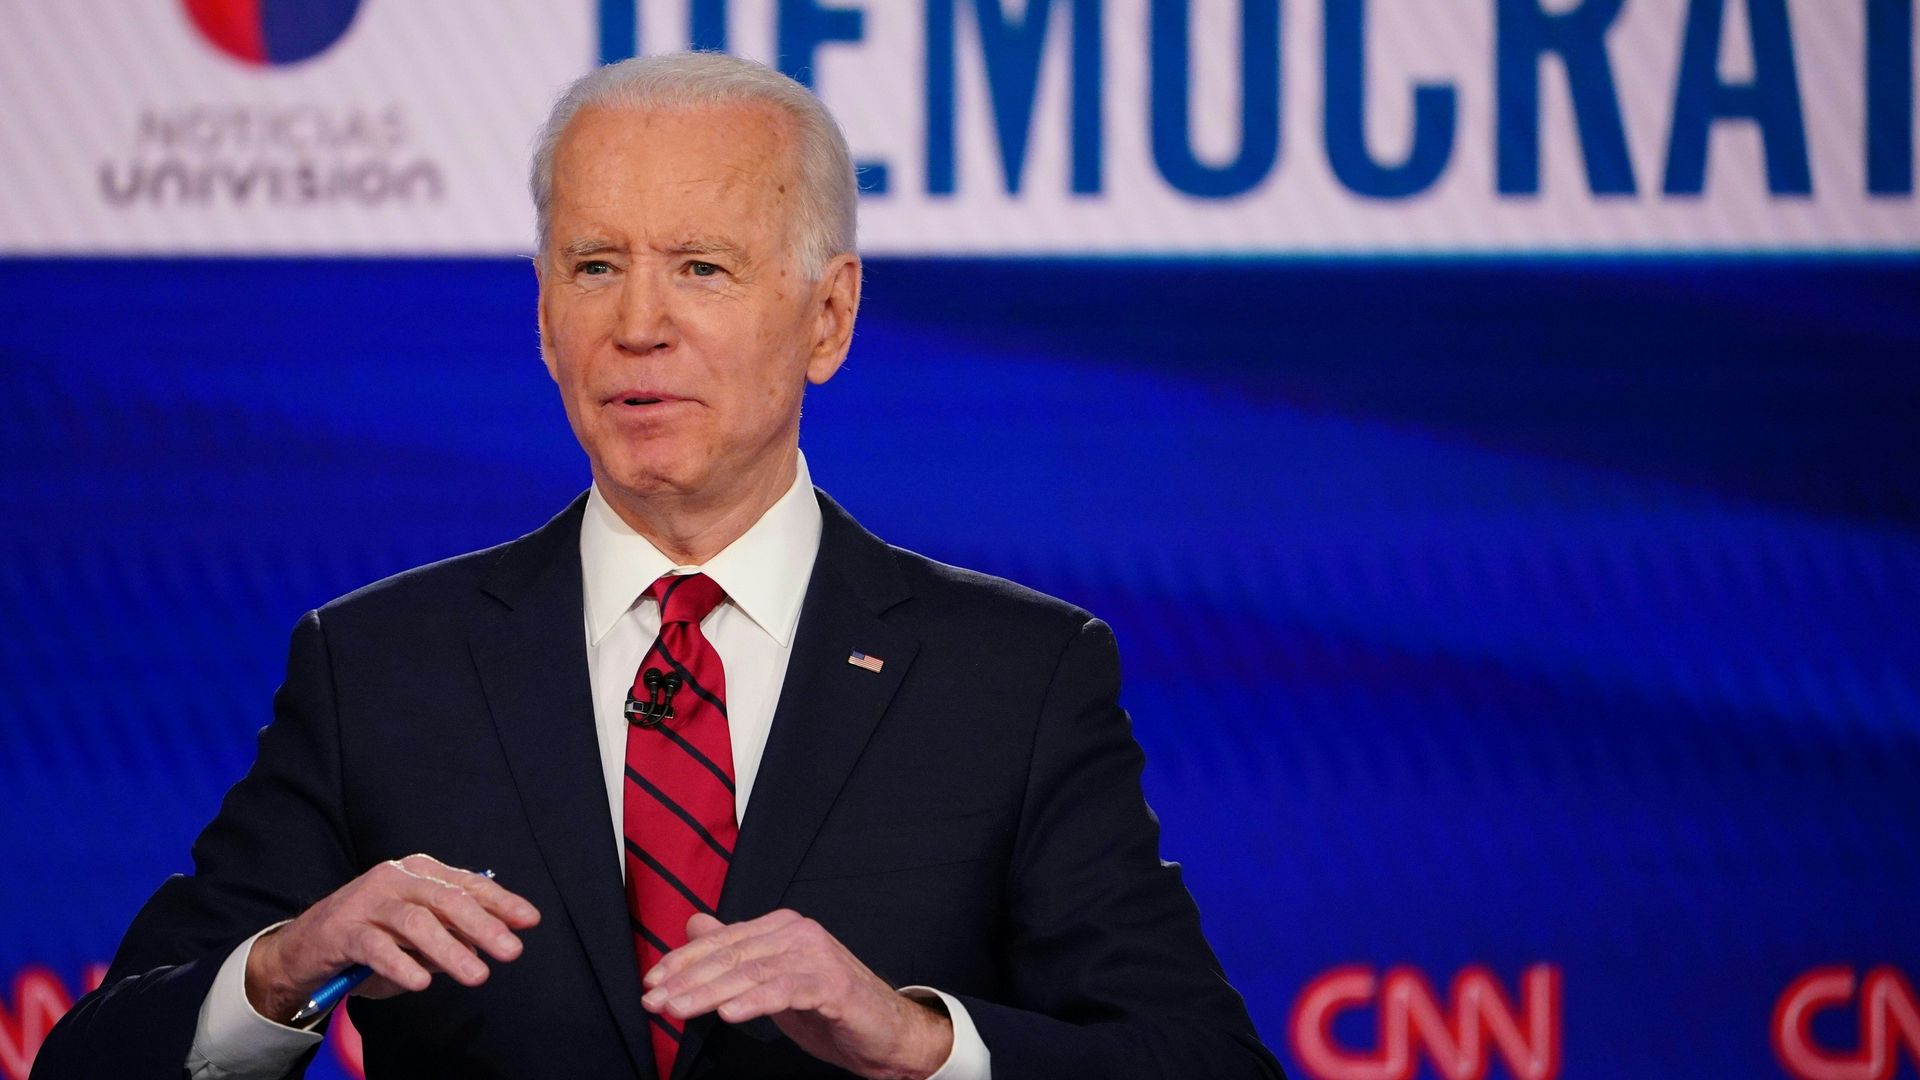 Democratic presidential hopeful Joe Biden in the presidential debate in a CNN Washington Bureau studio in Washington, DC on March 15